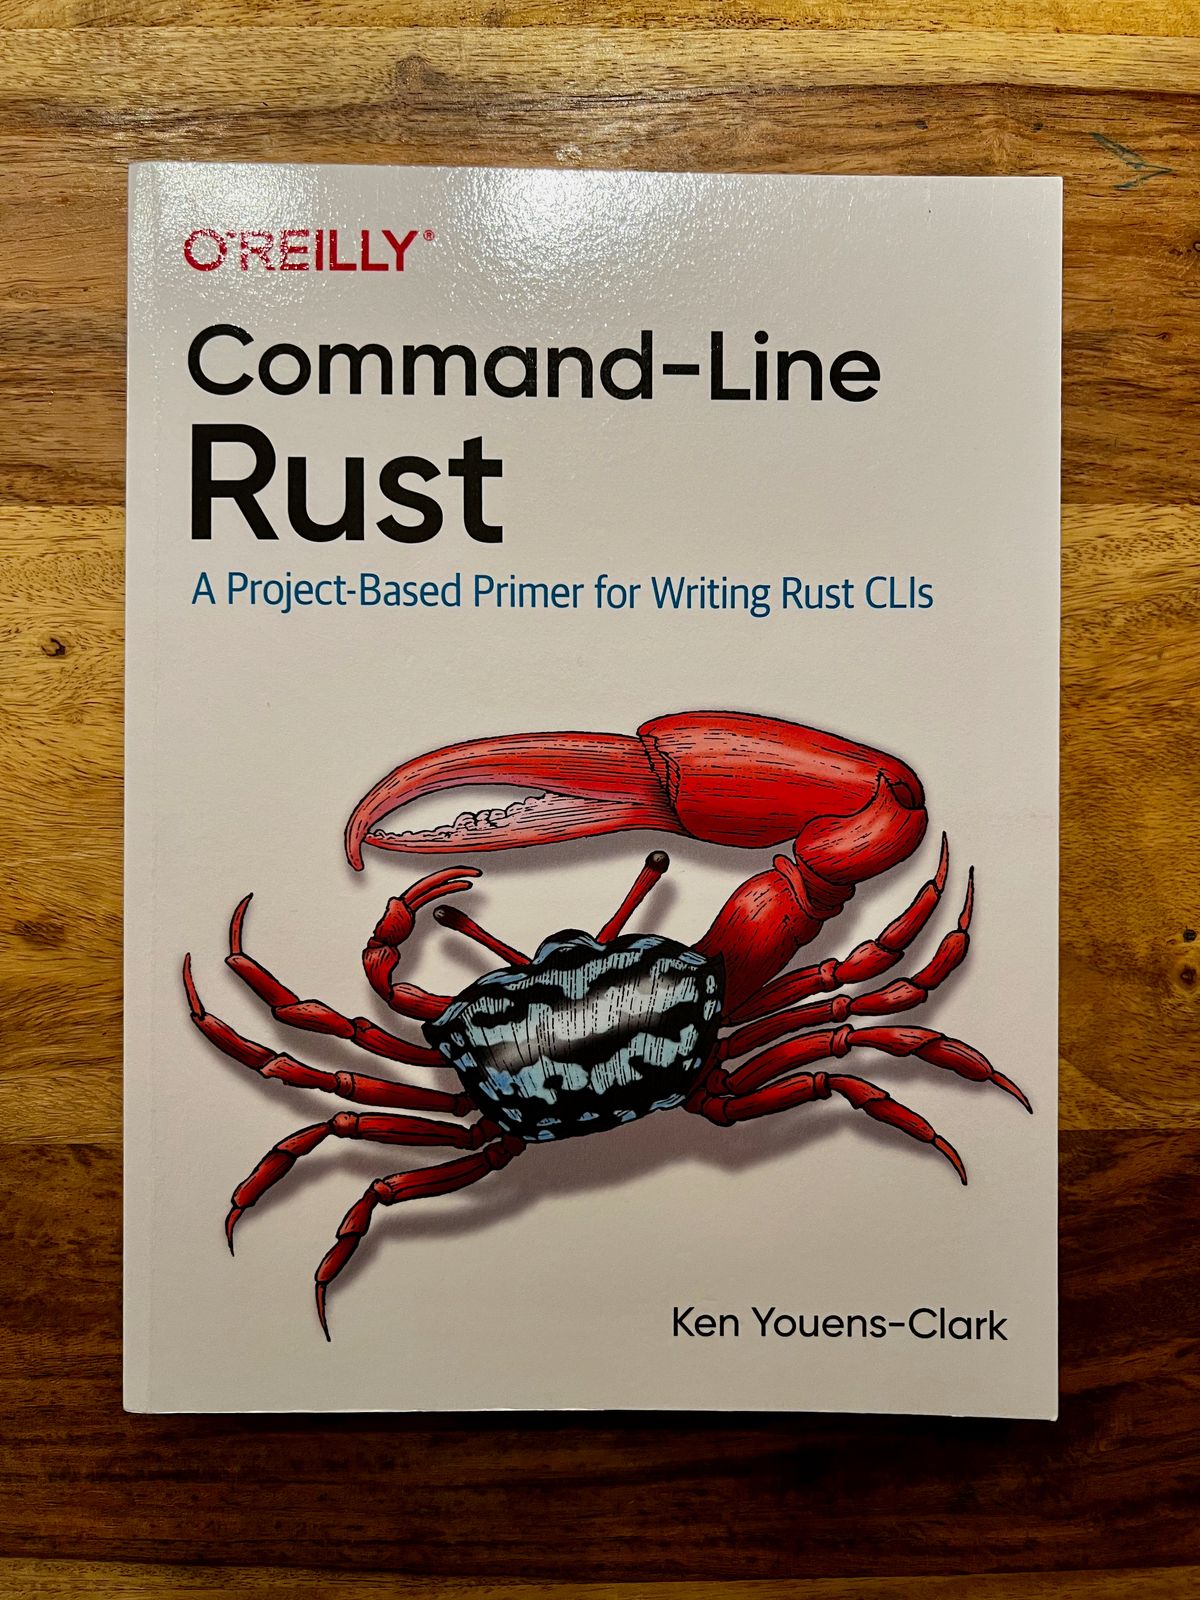 "Command-Line Rust" by Ken Youens-Clark